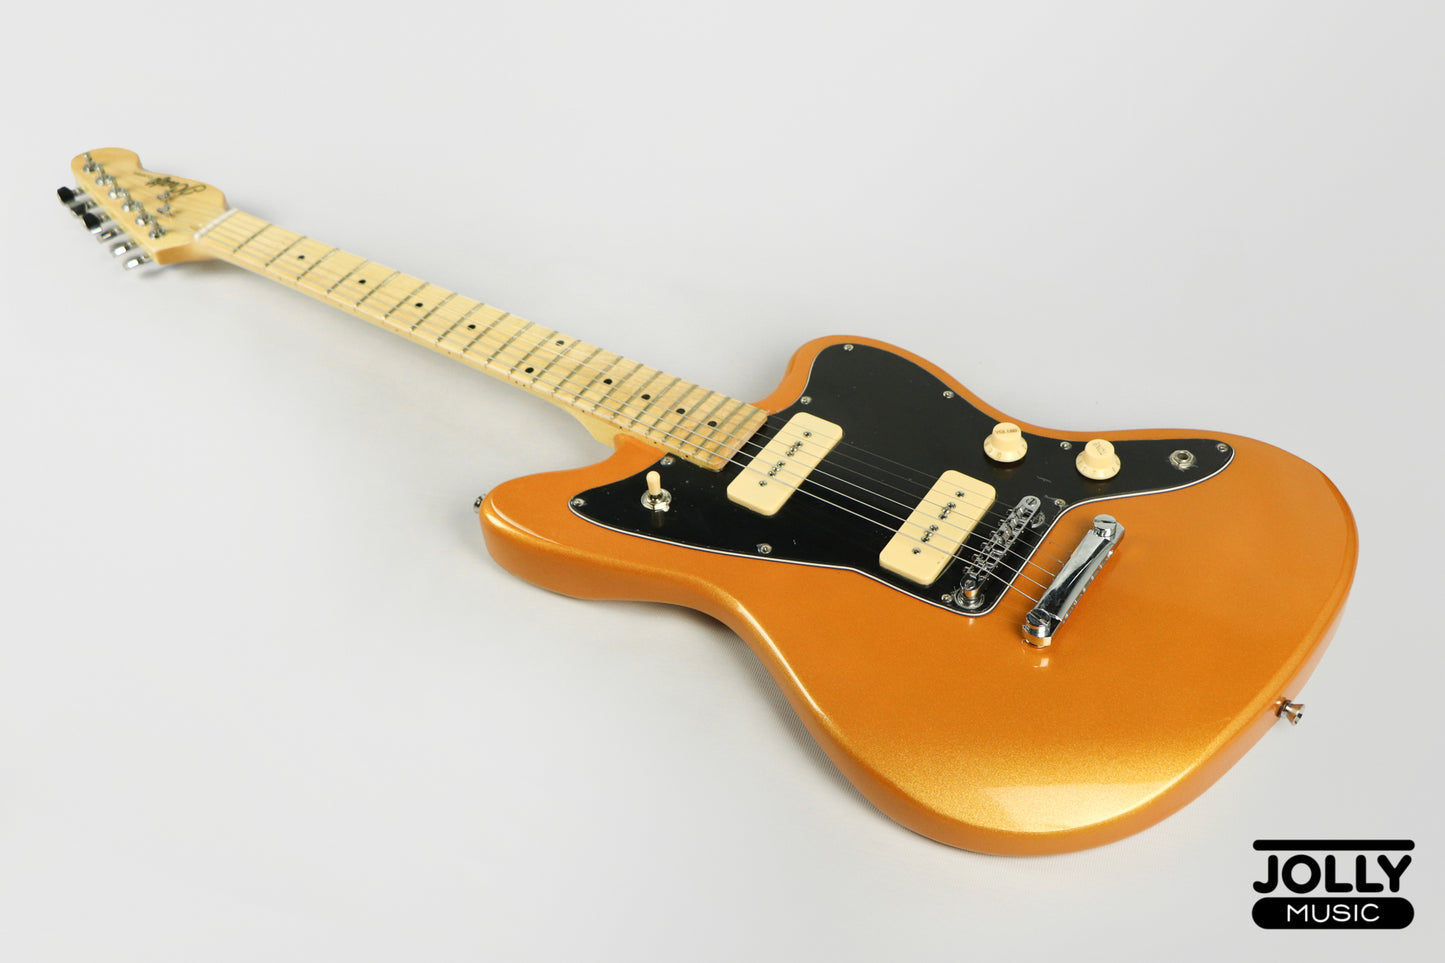 JCraft JZ-1 Offset Electric Guitar - Metallic Orange